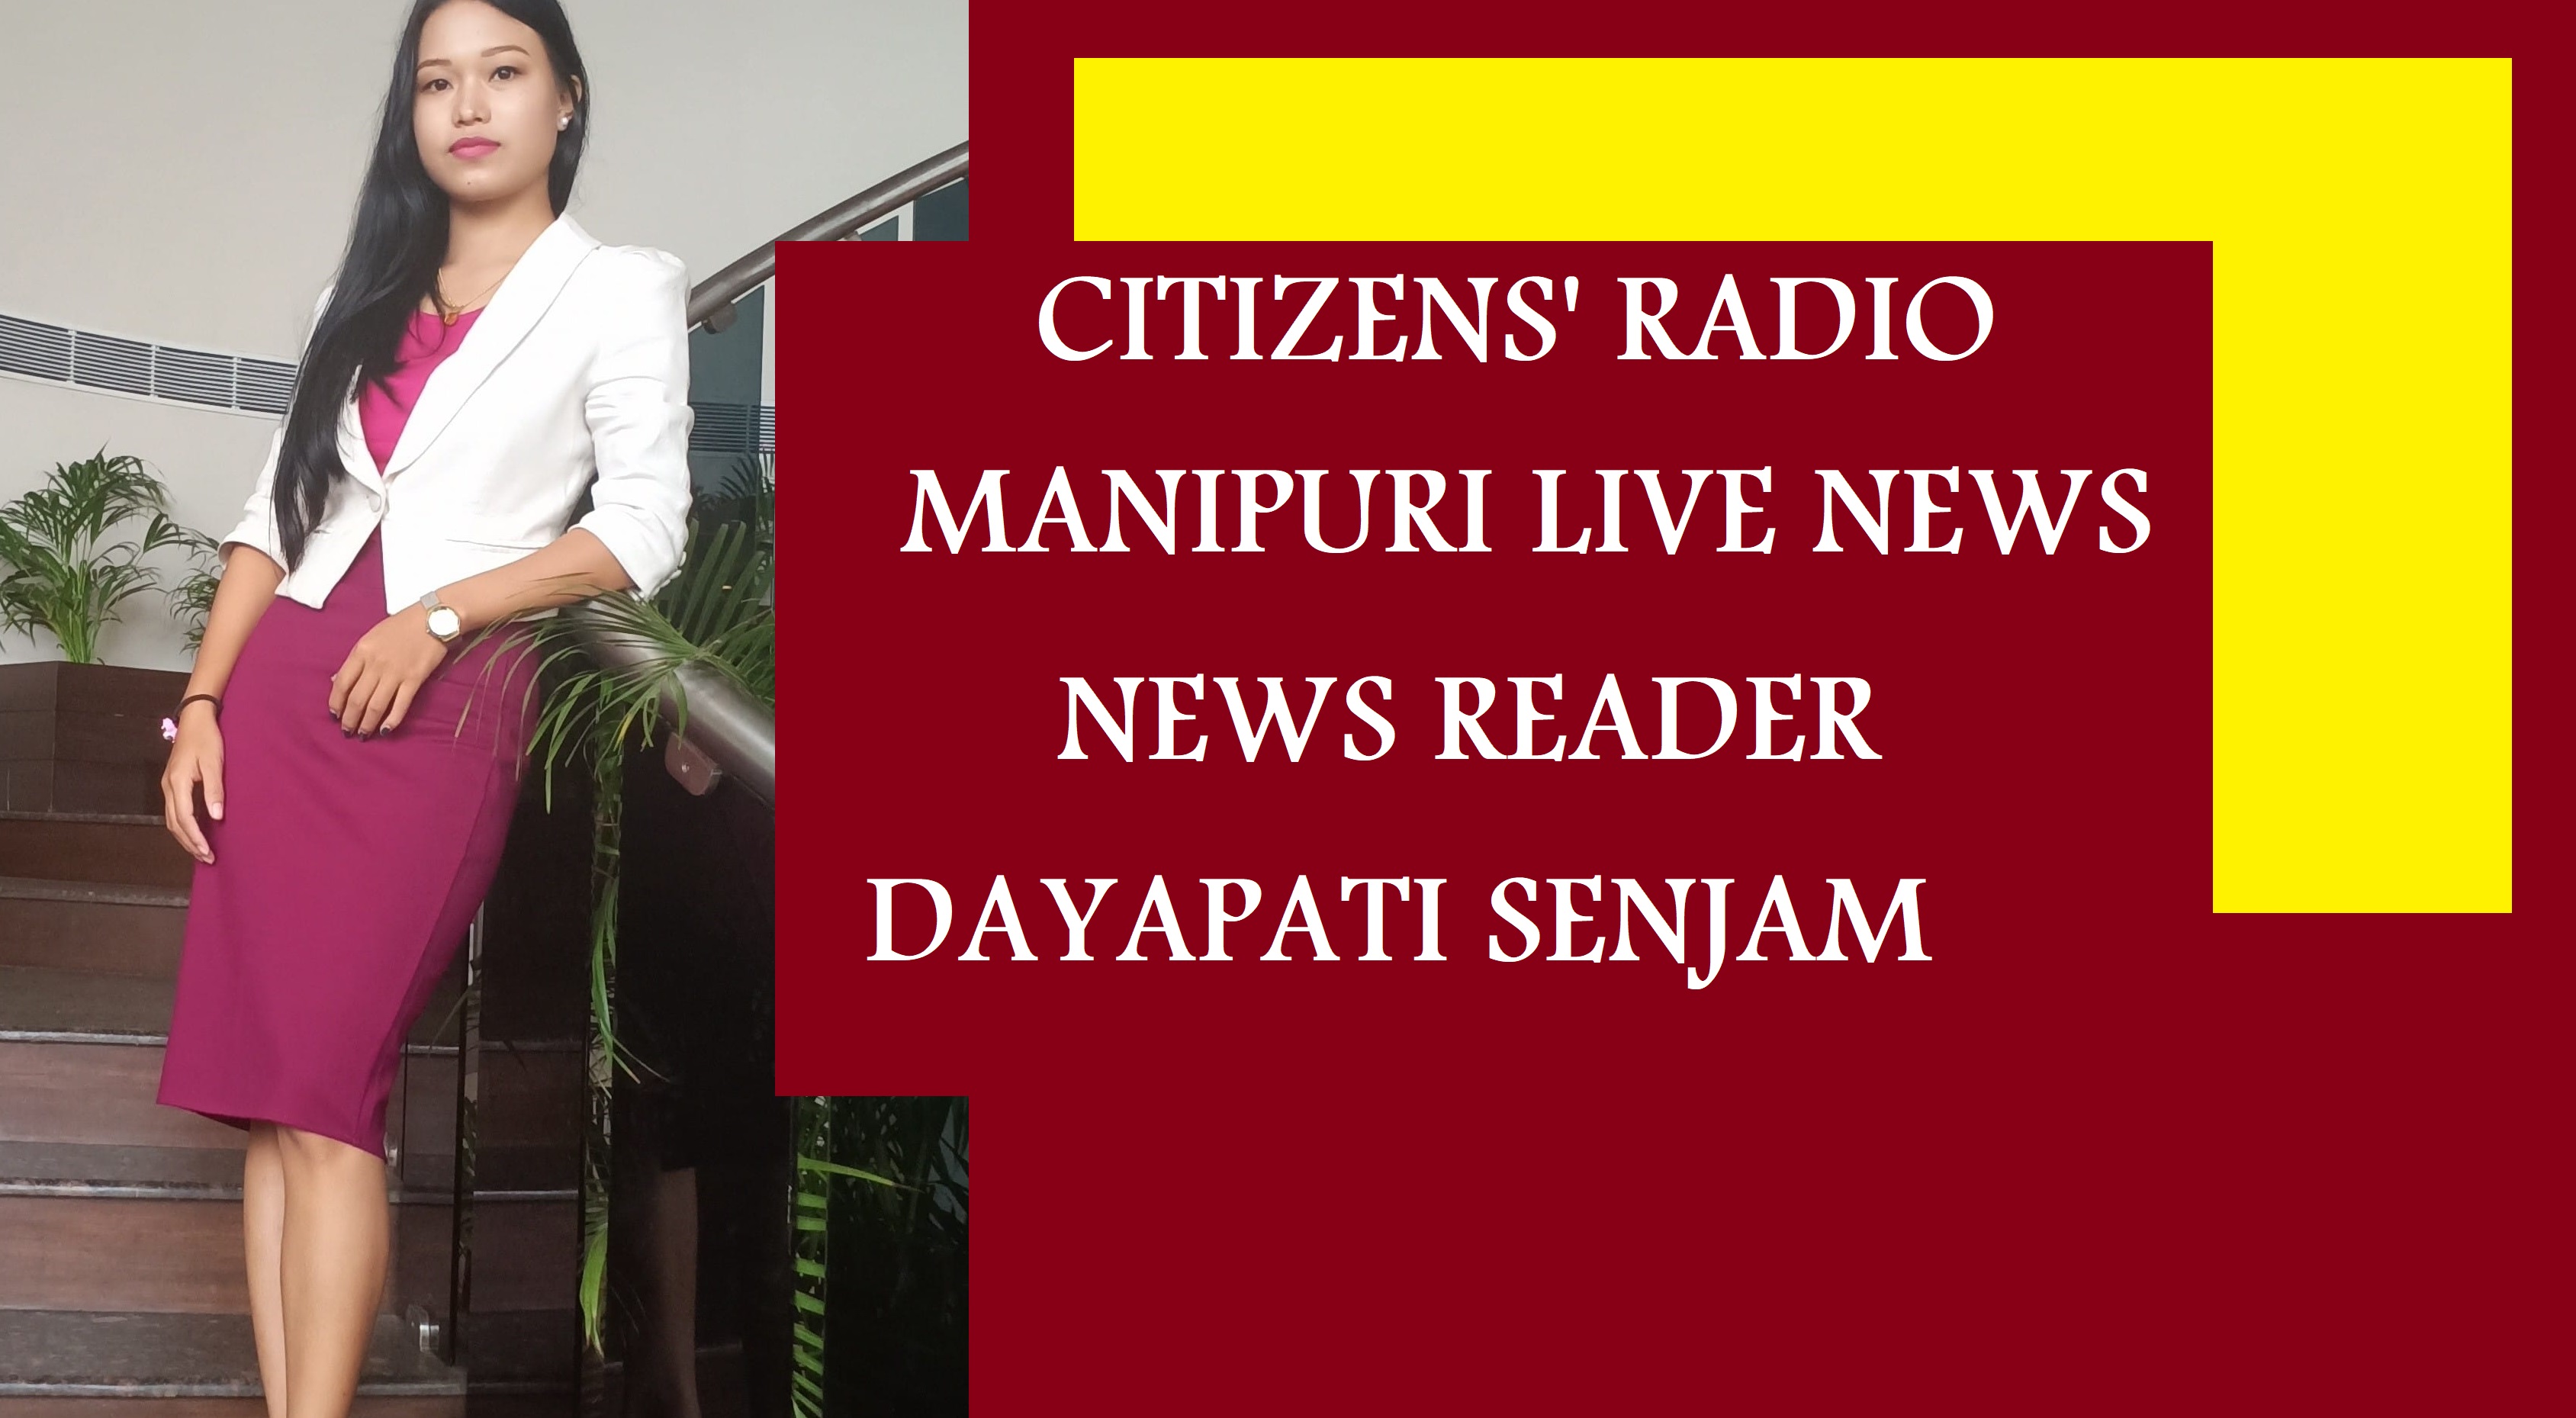 8 PM MANIPURI NEWS - Citizen Radio Manipur